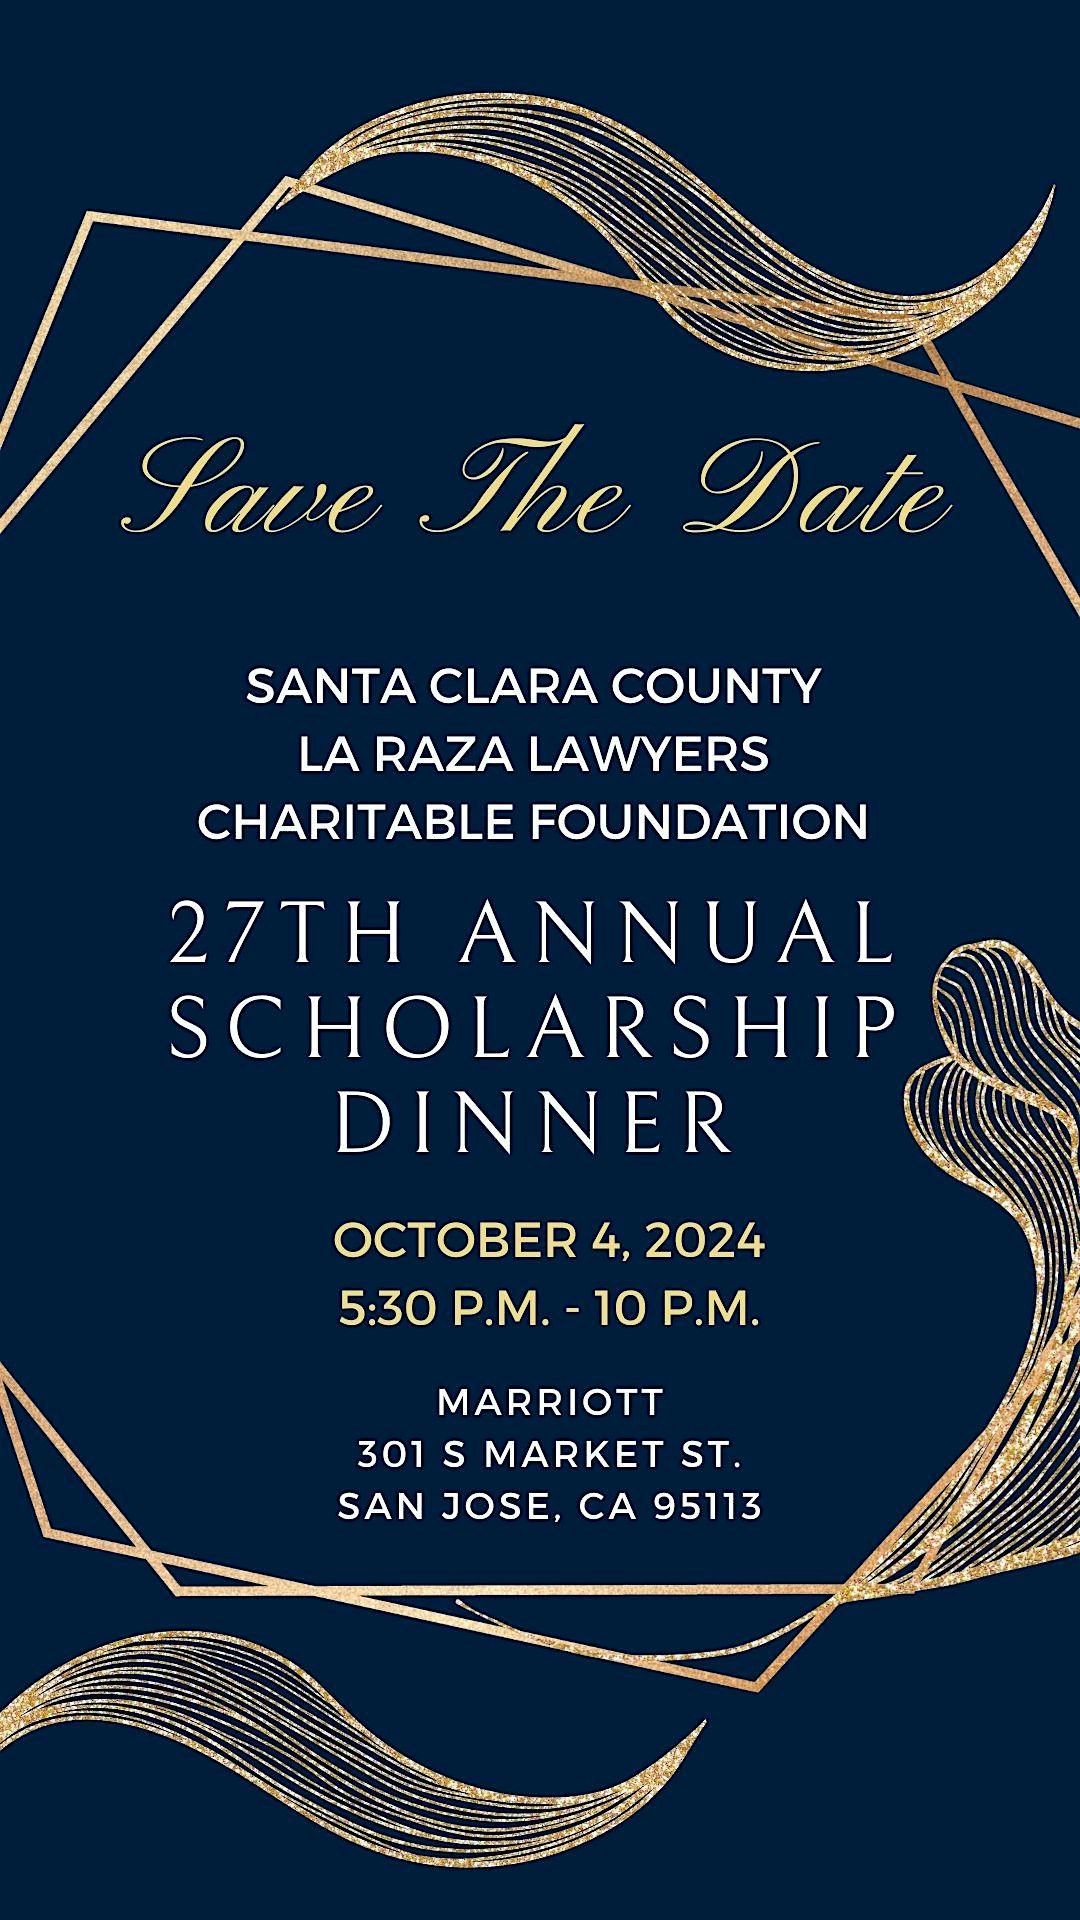 La Raza Lawyers Charitable Foundation's 27th Annual Scholarship Dinner